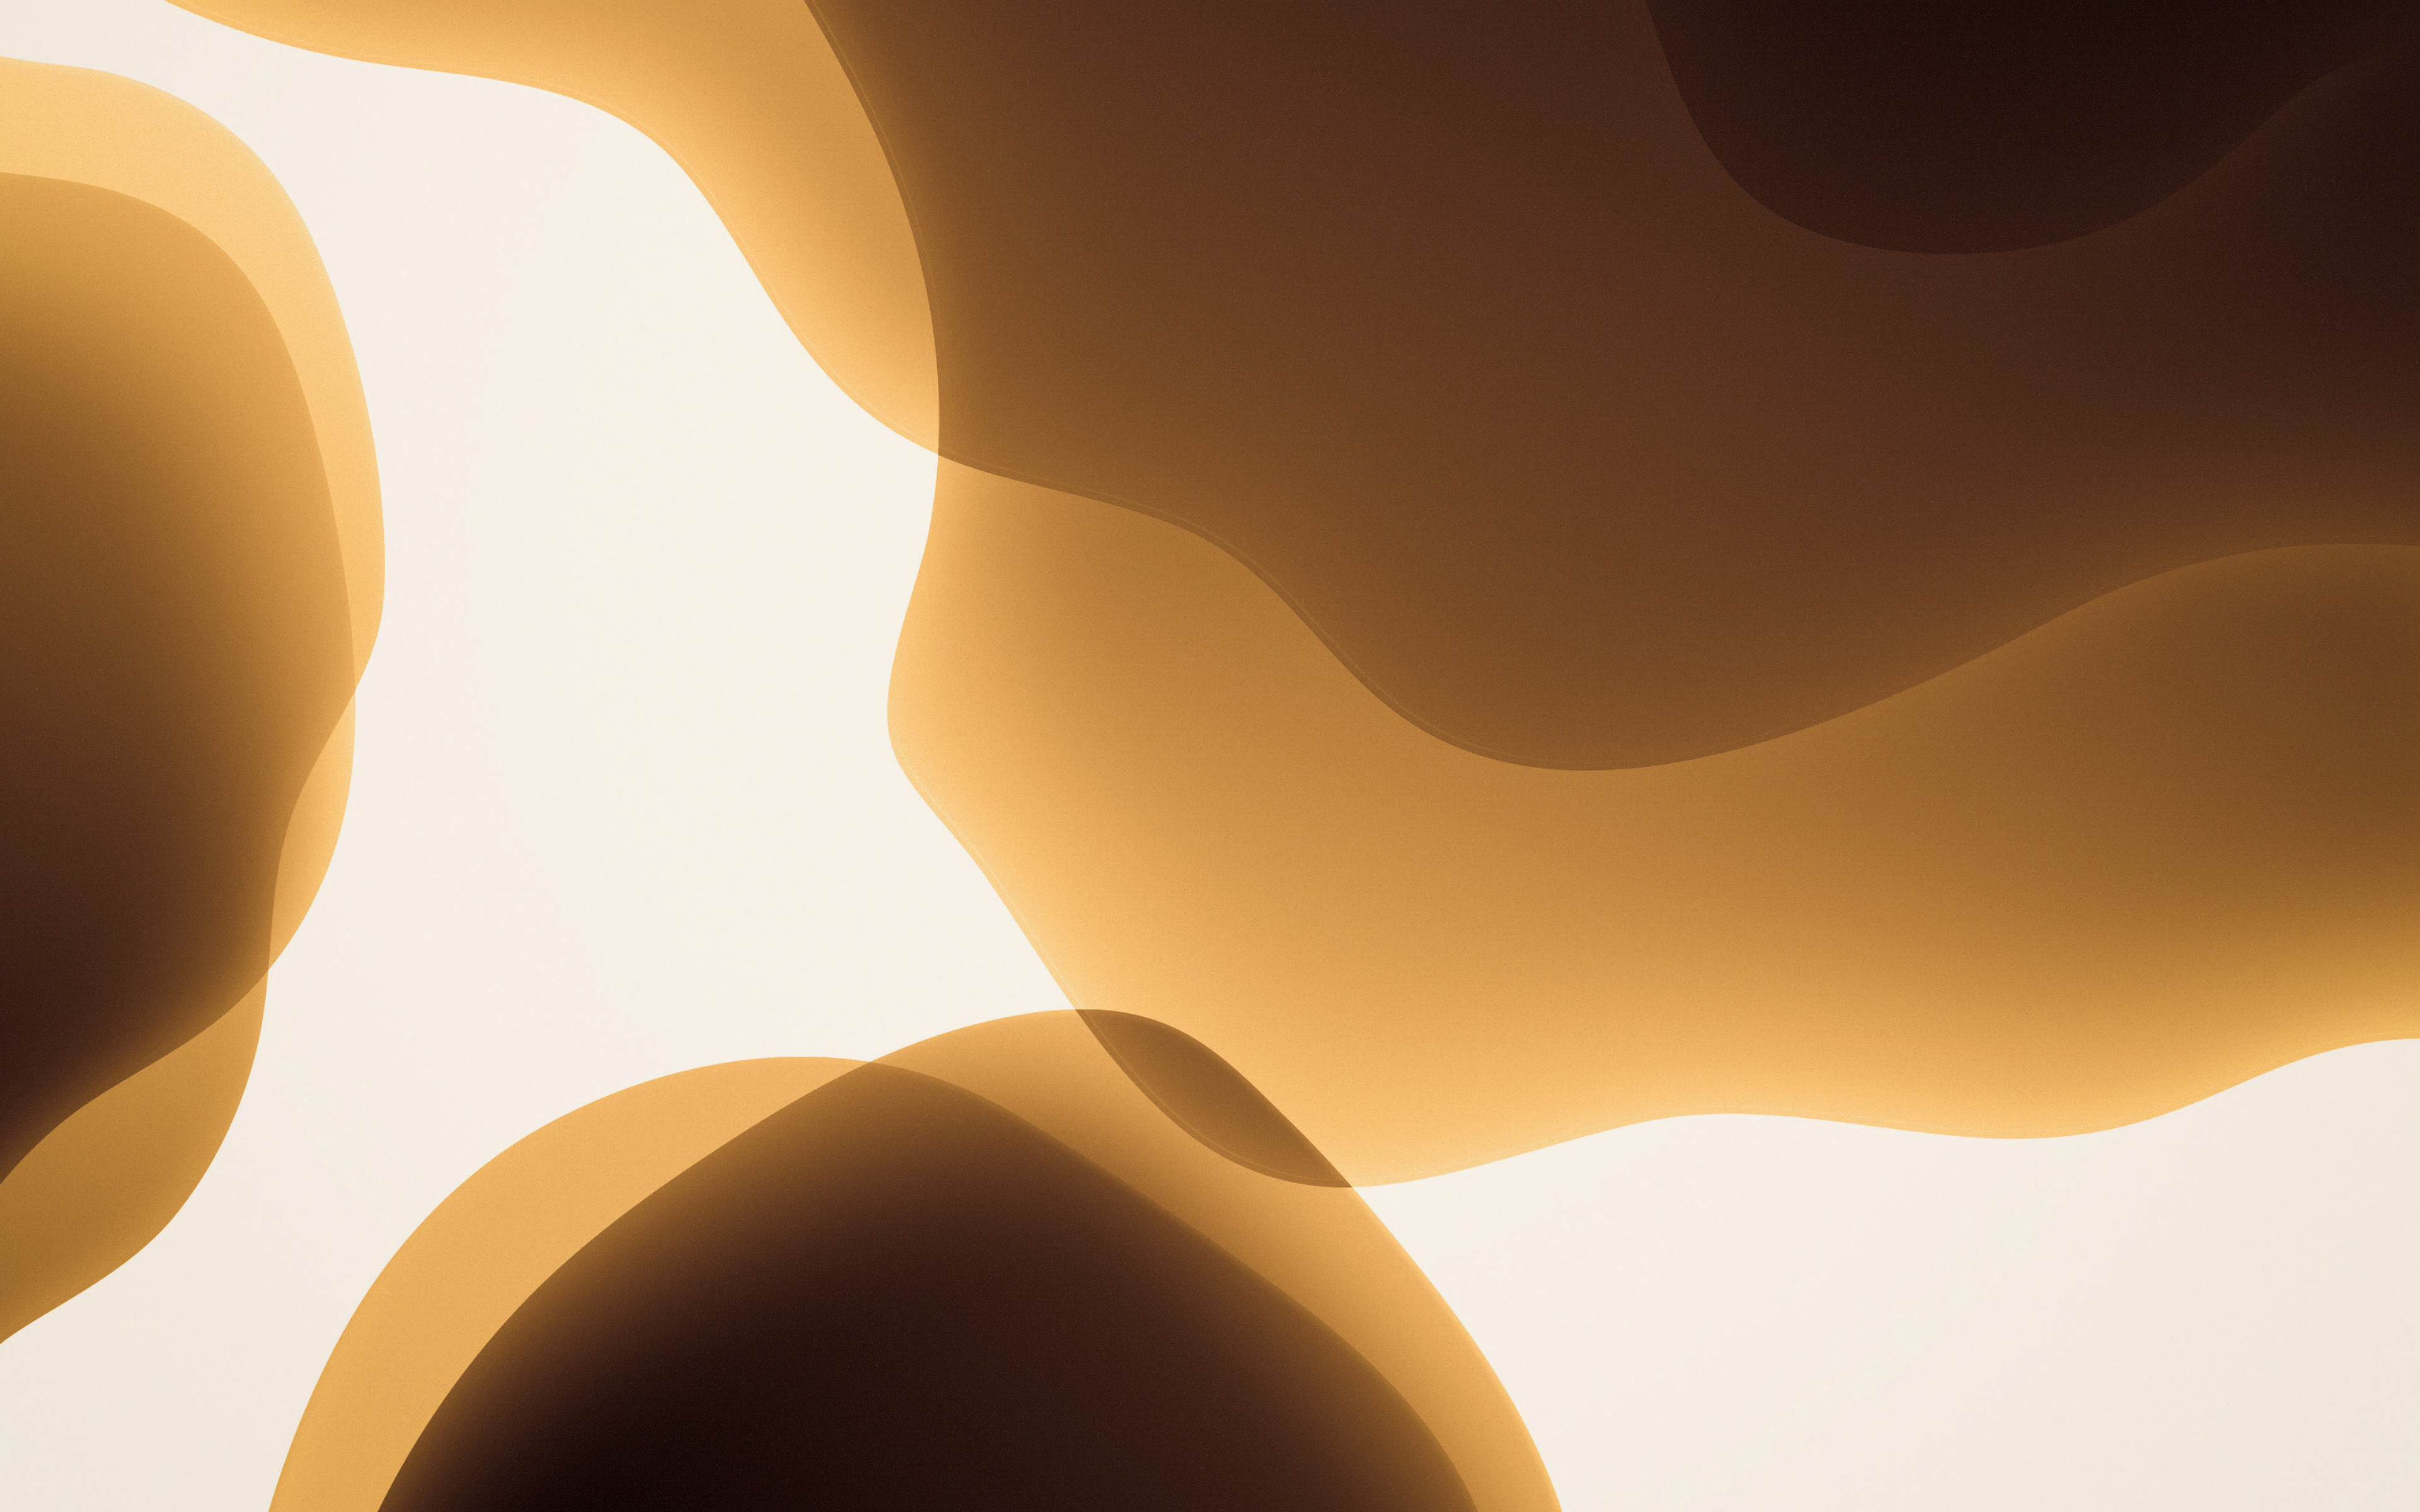 iOS 13 Wallpaper - Gold (Light) by AR72014